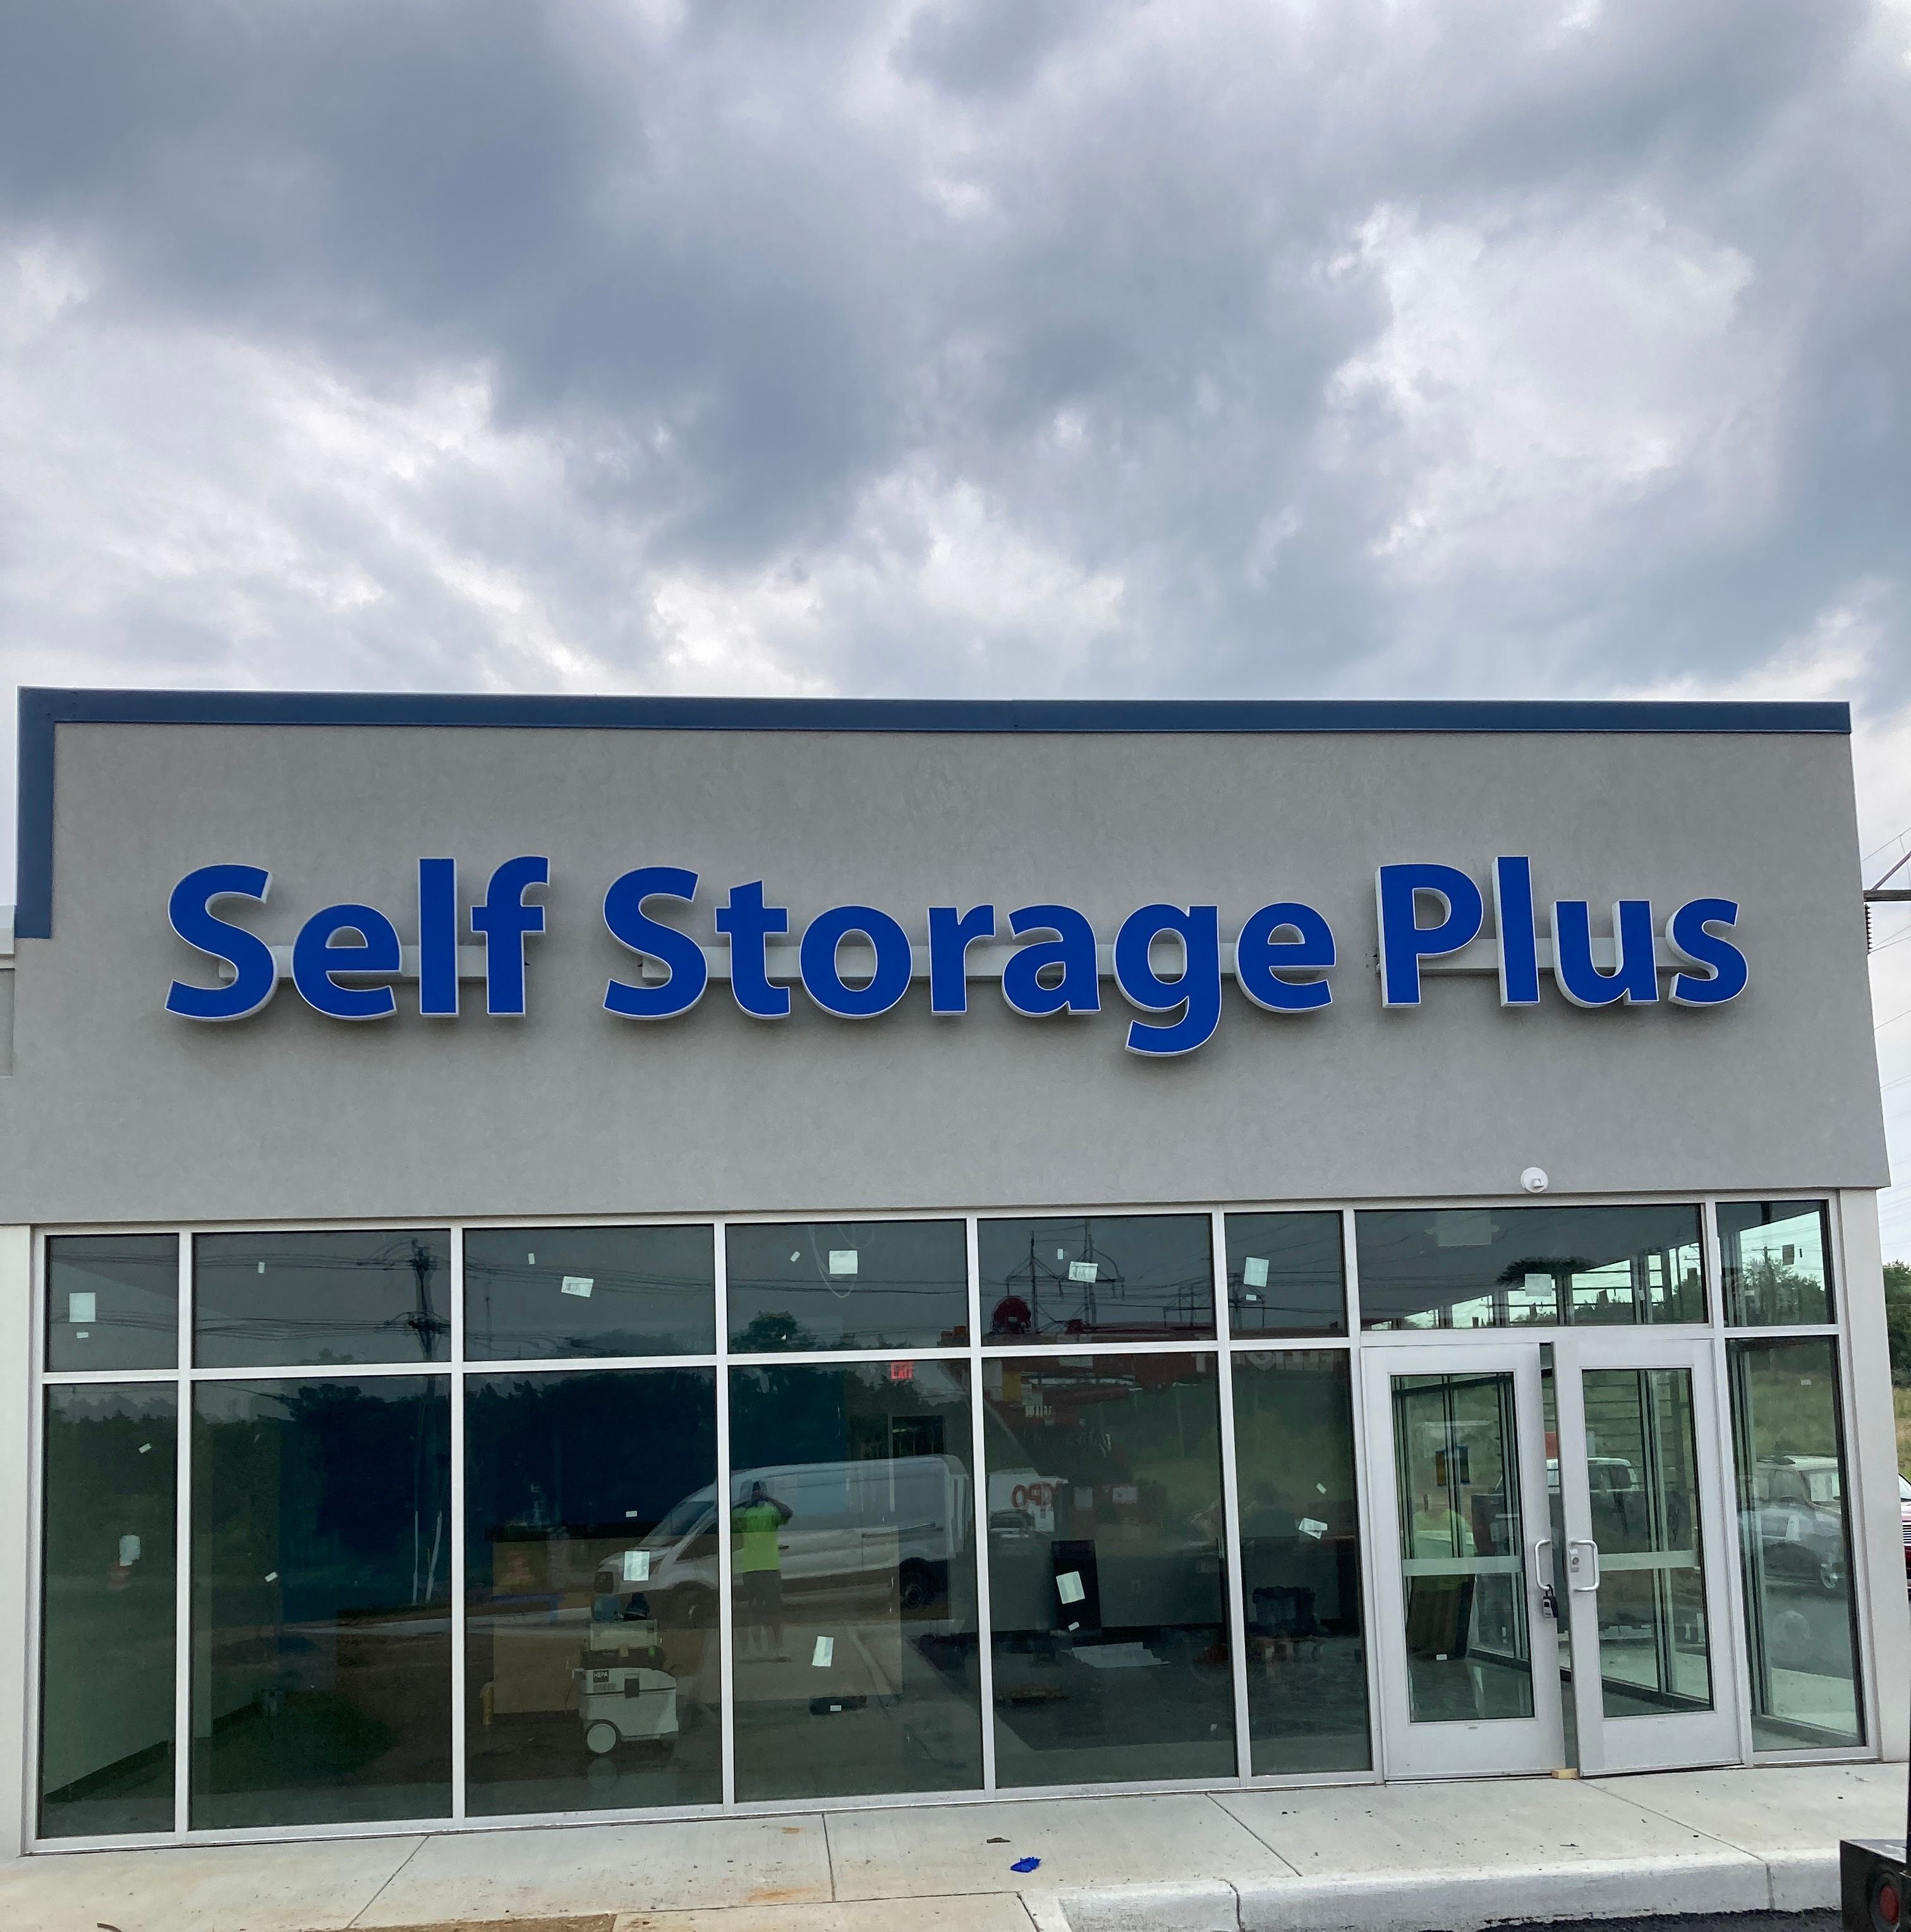 Self Storage Plus